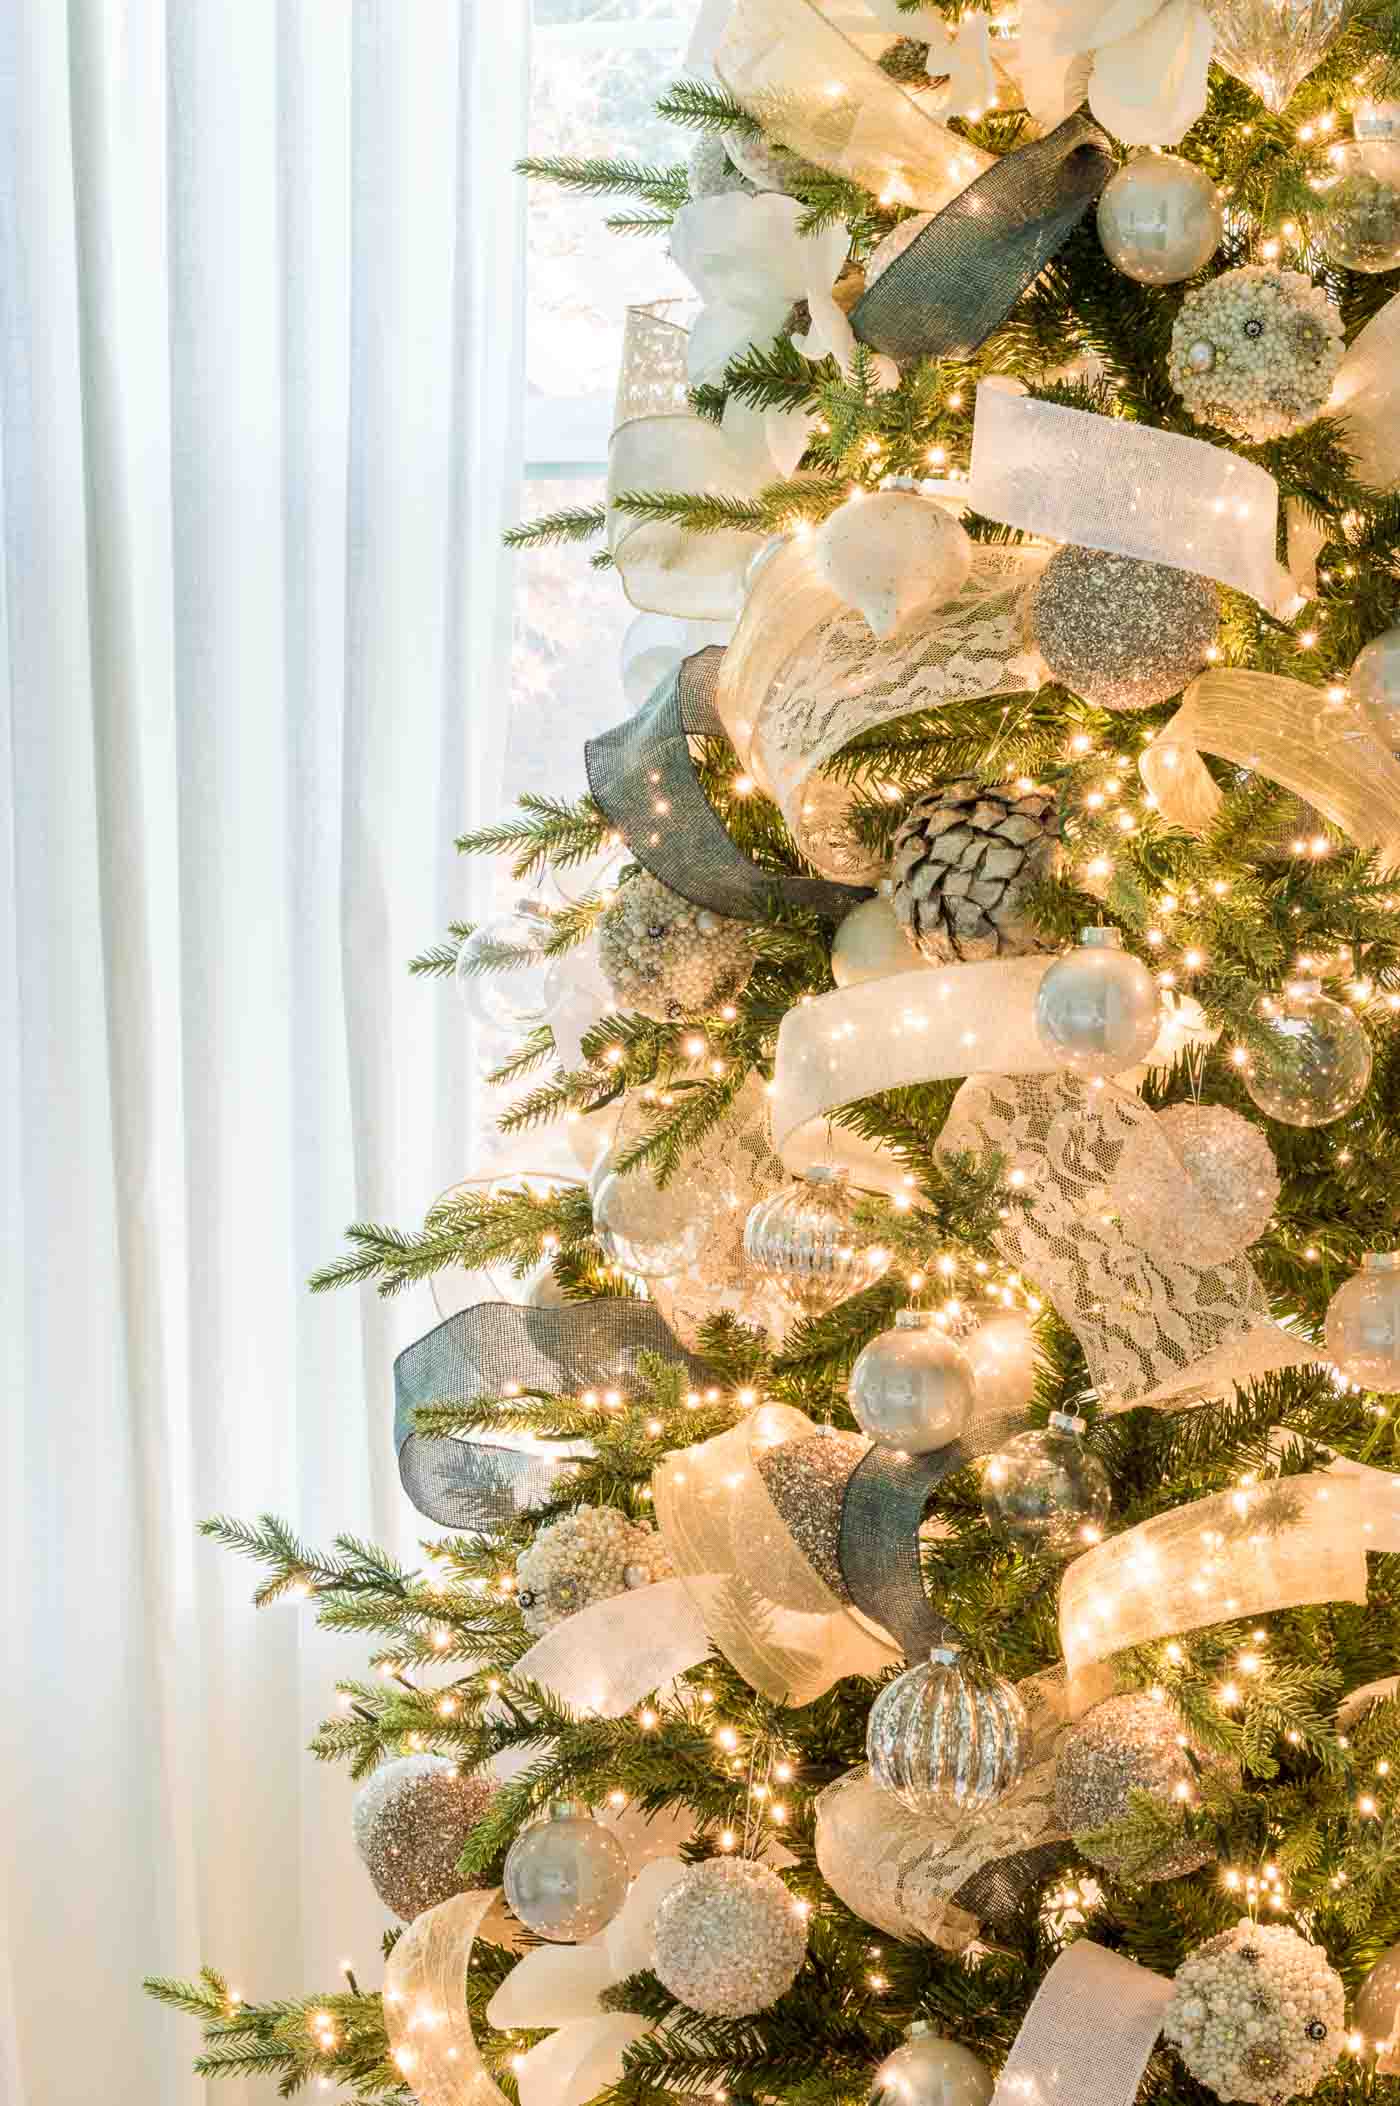 Southern Magnolia Themed Christmas Tree with Elegant Decor